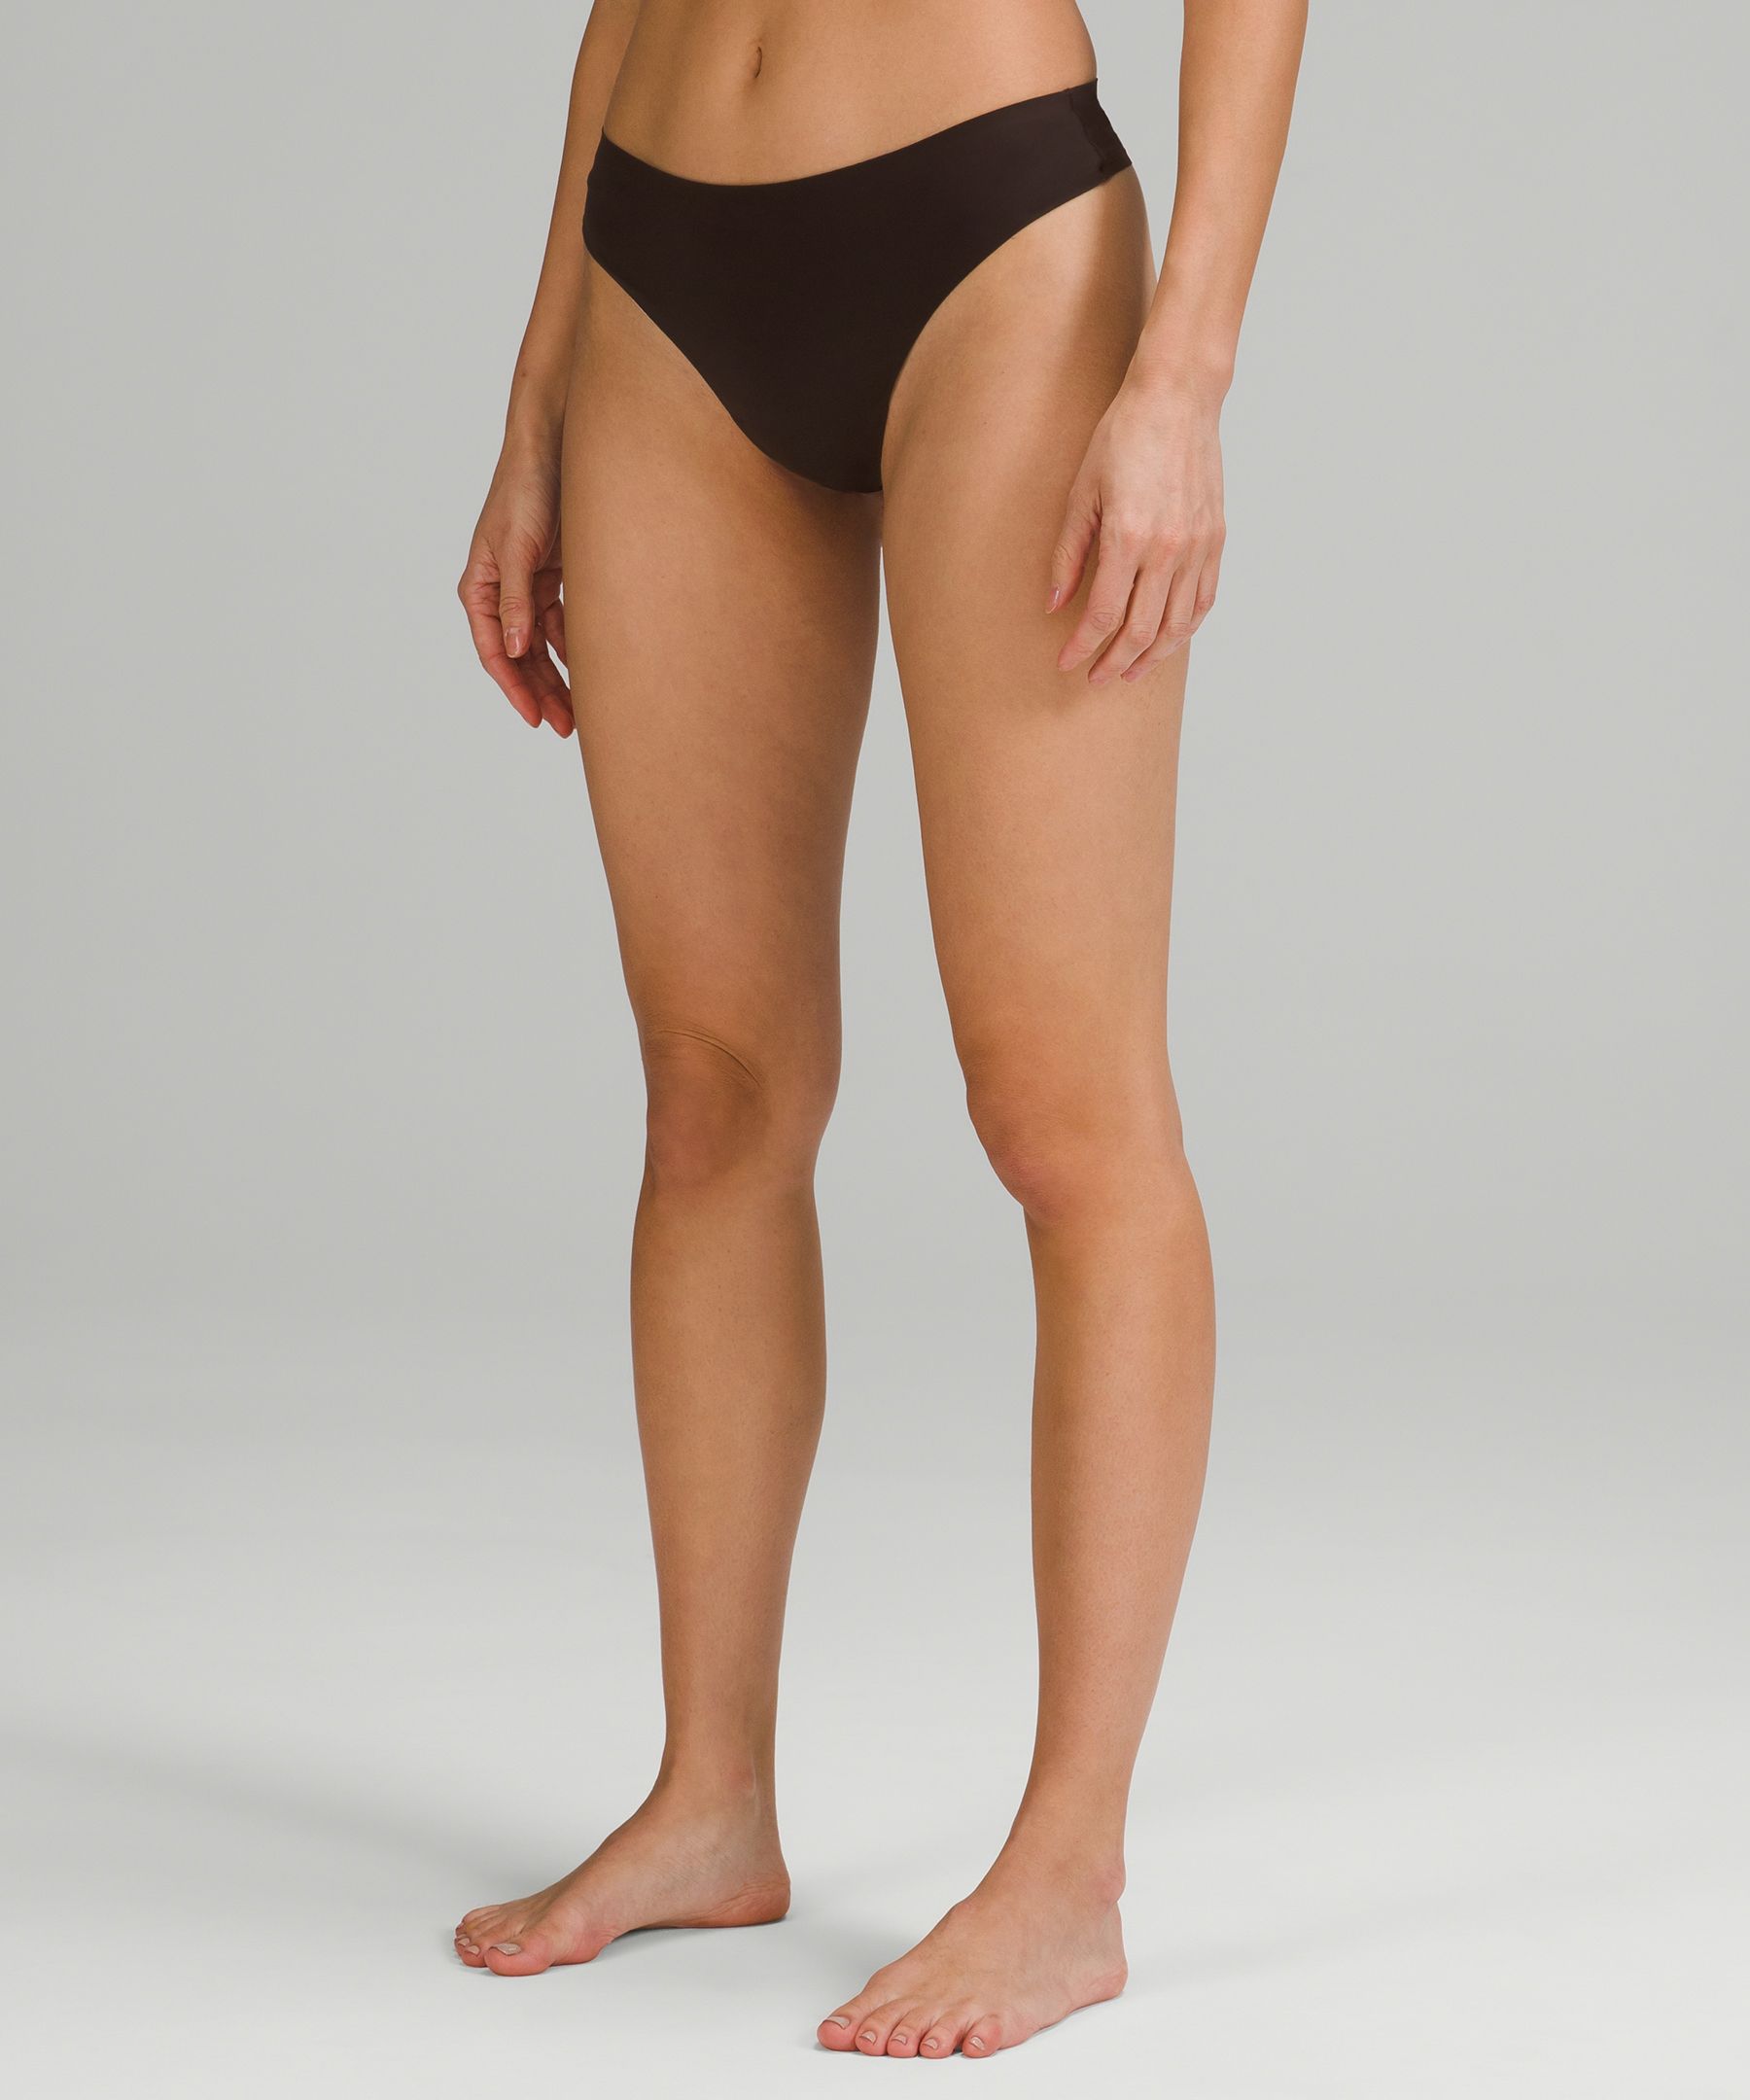 lululemon athletica Invisiwear Mid-rise Thong Underwear 7 Pack in Metallic